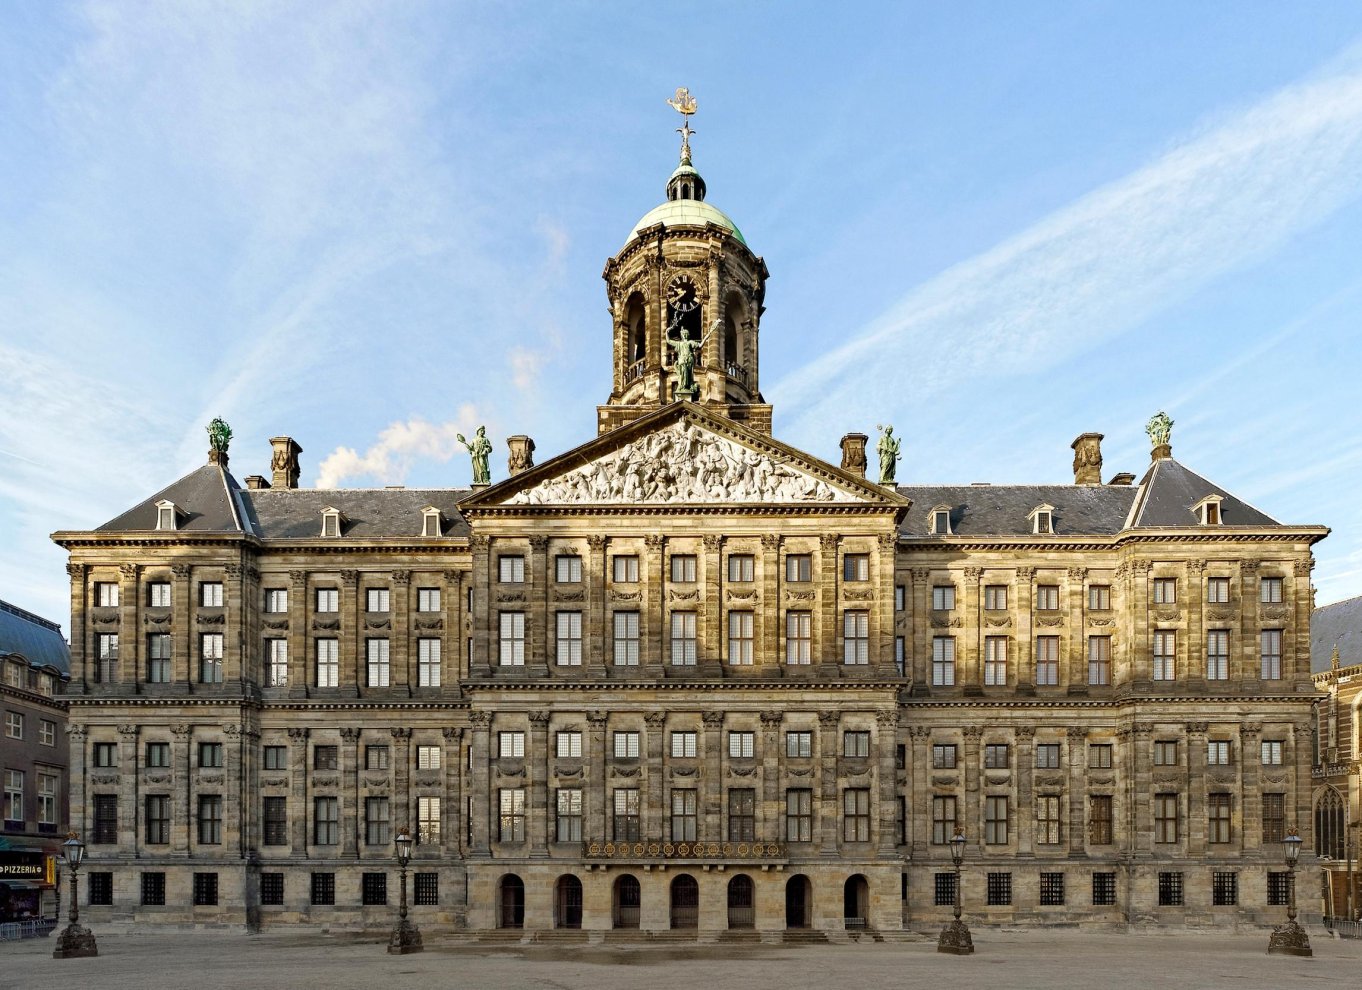 tour royal palace amsterdam